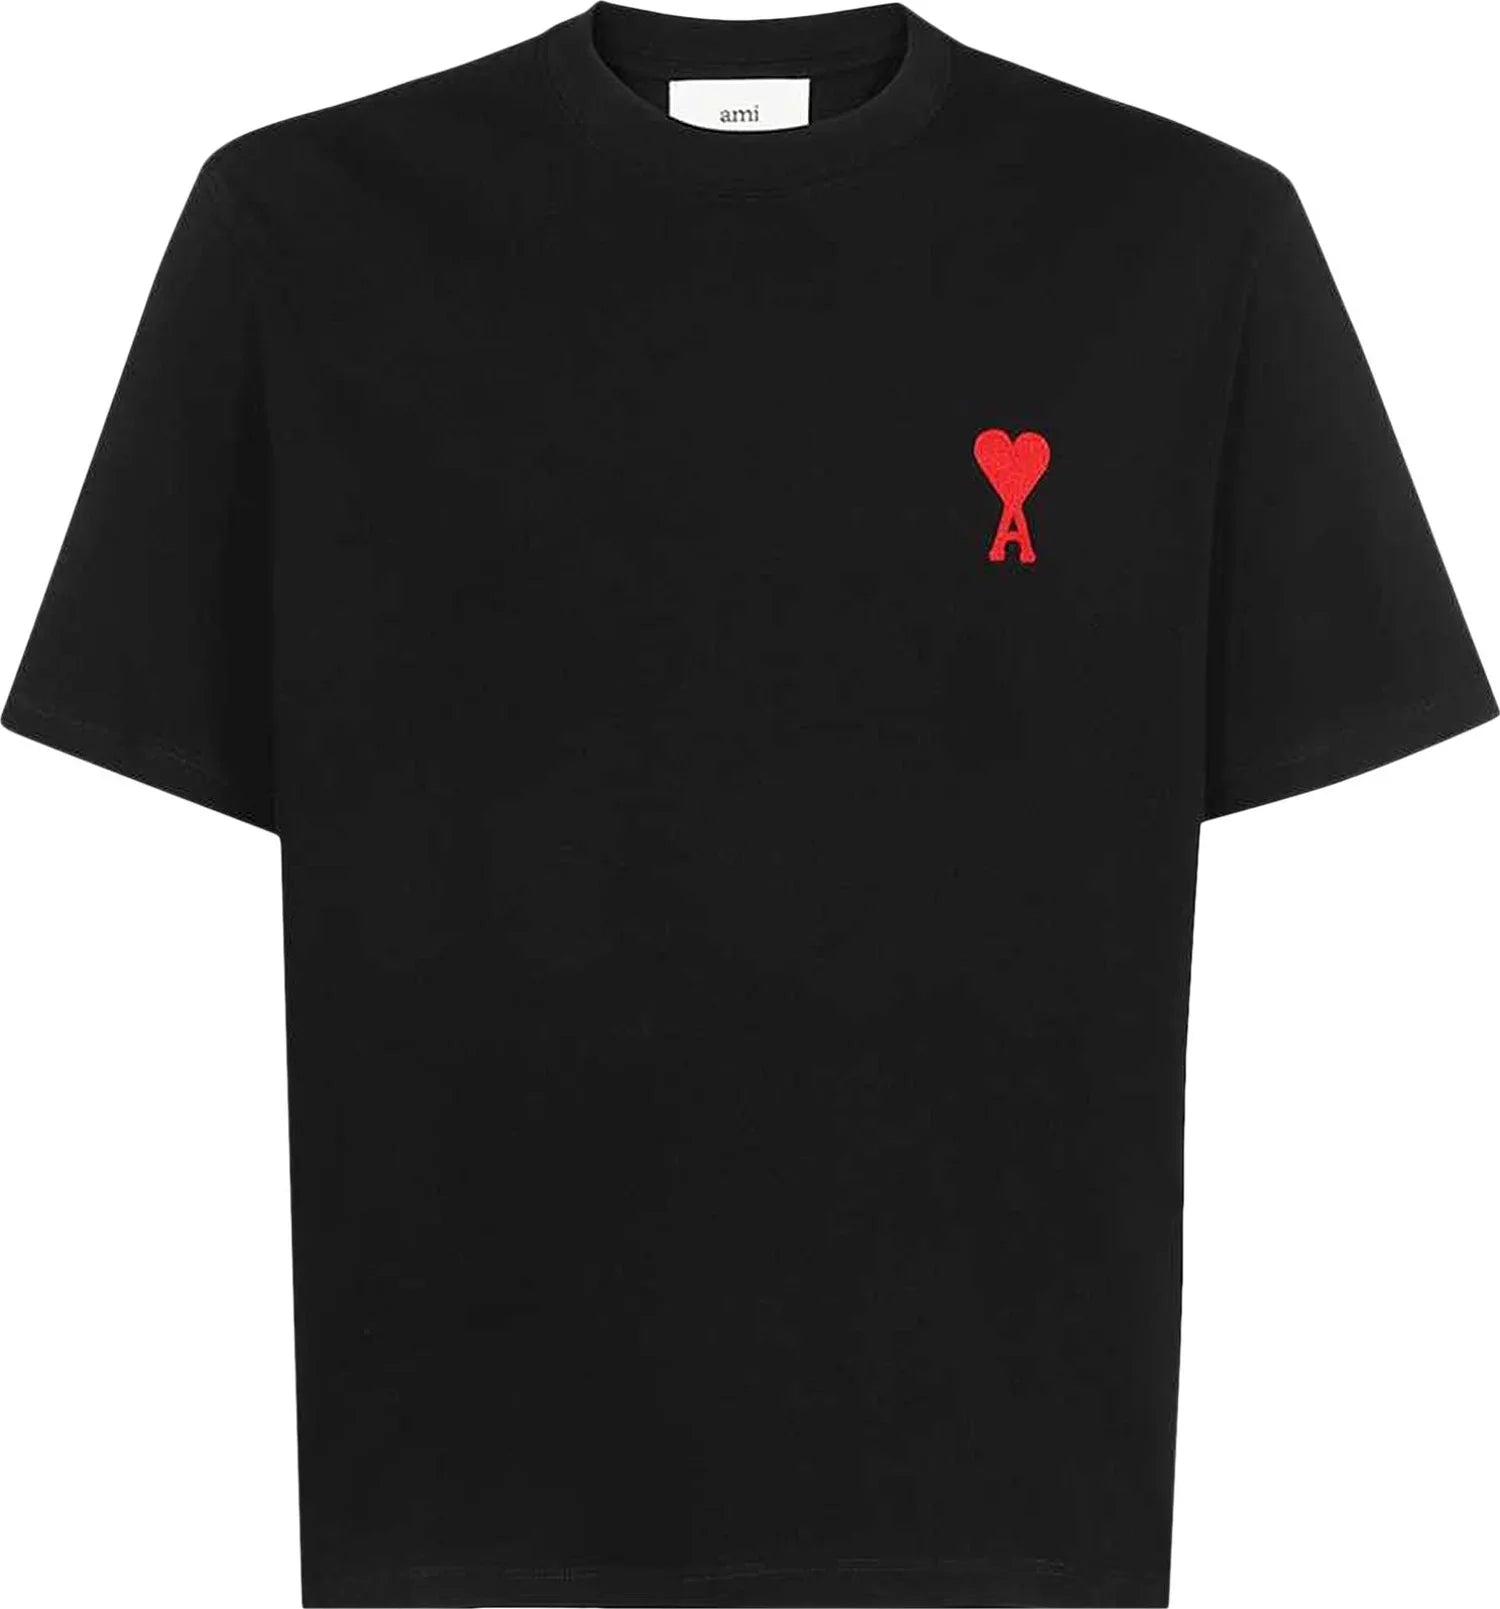 Ami Tonal De Coeur T-Shirt 'Black/Red' Clothing